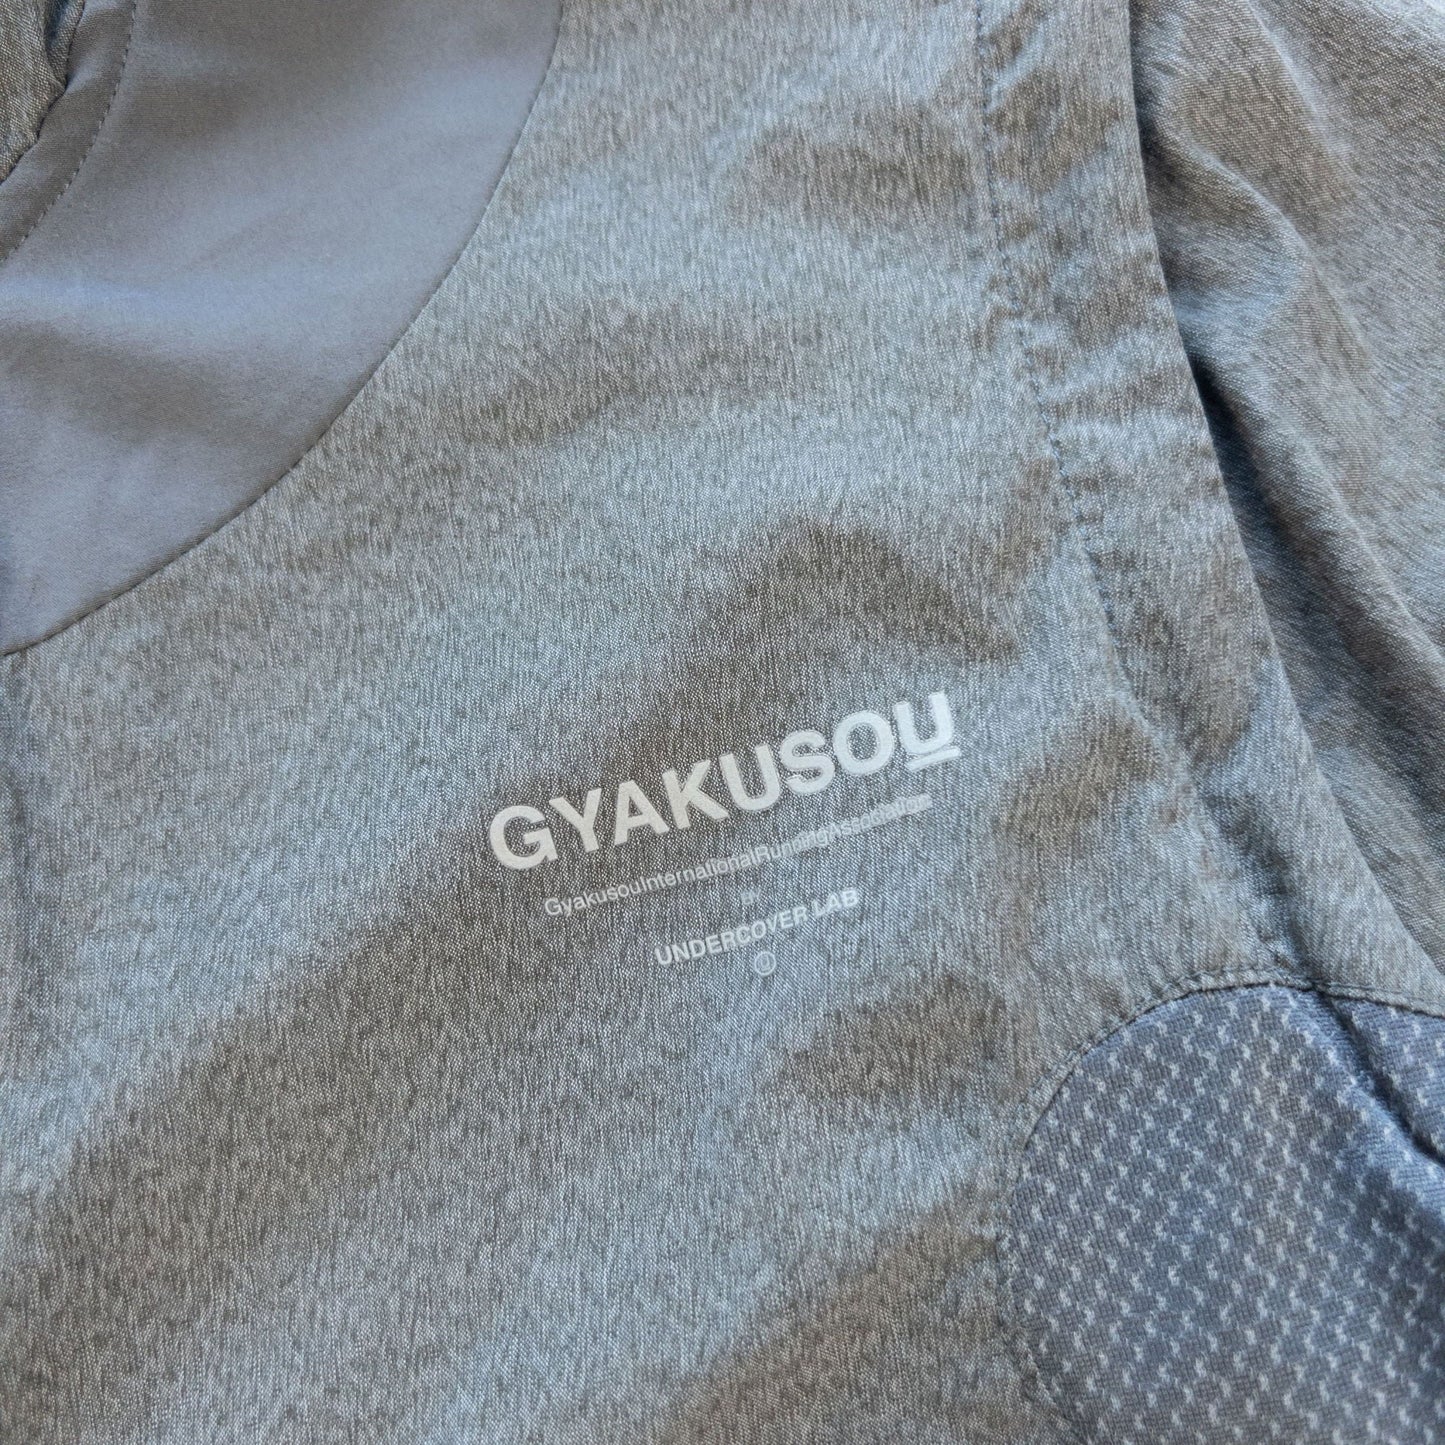 Vintage Nike GYAKUSOU Undercover Jacket Size L